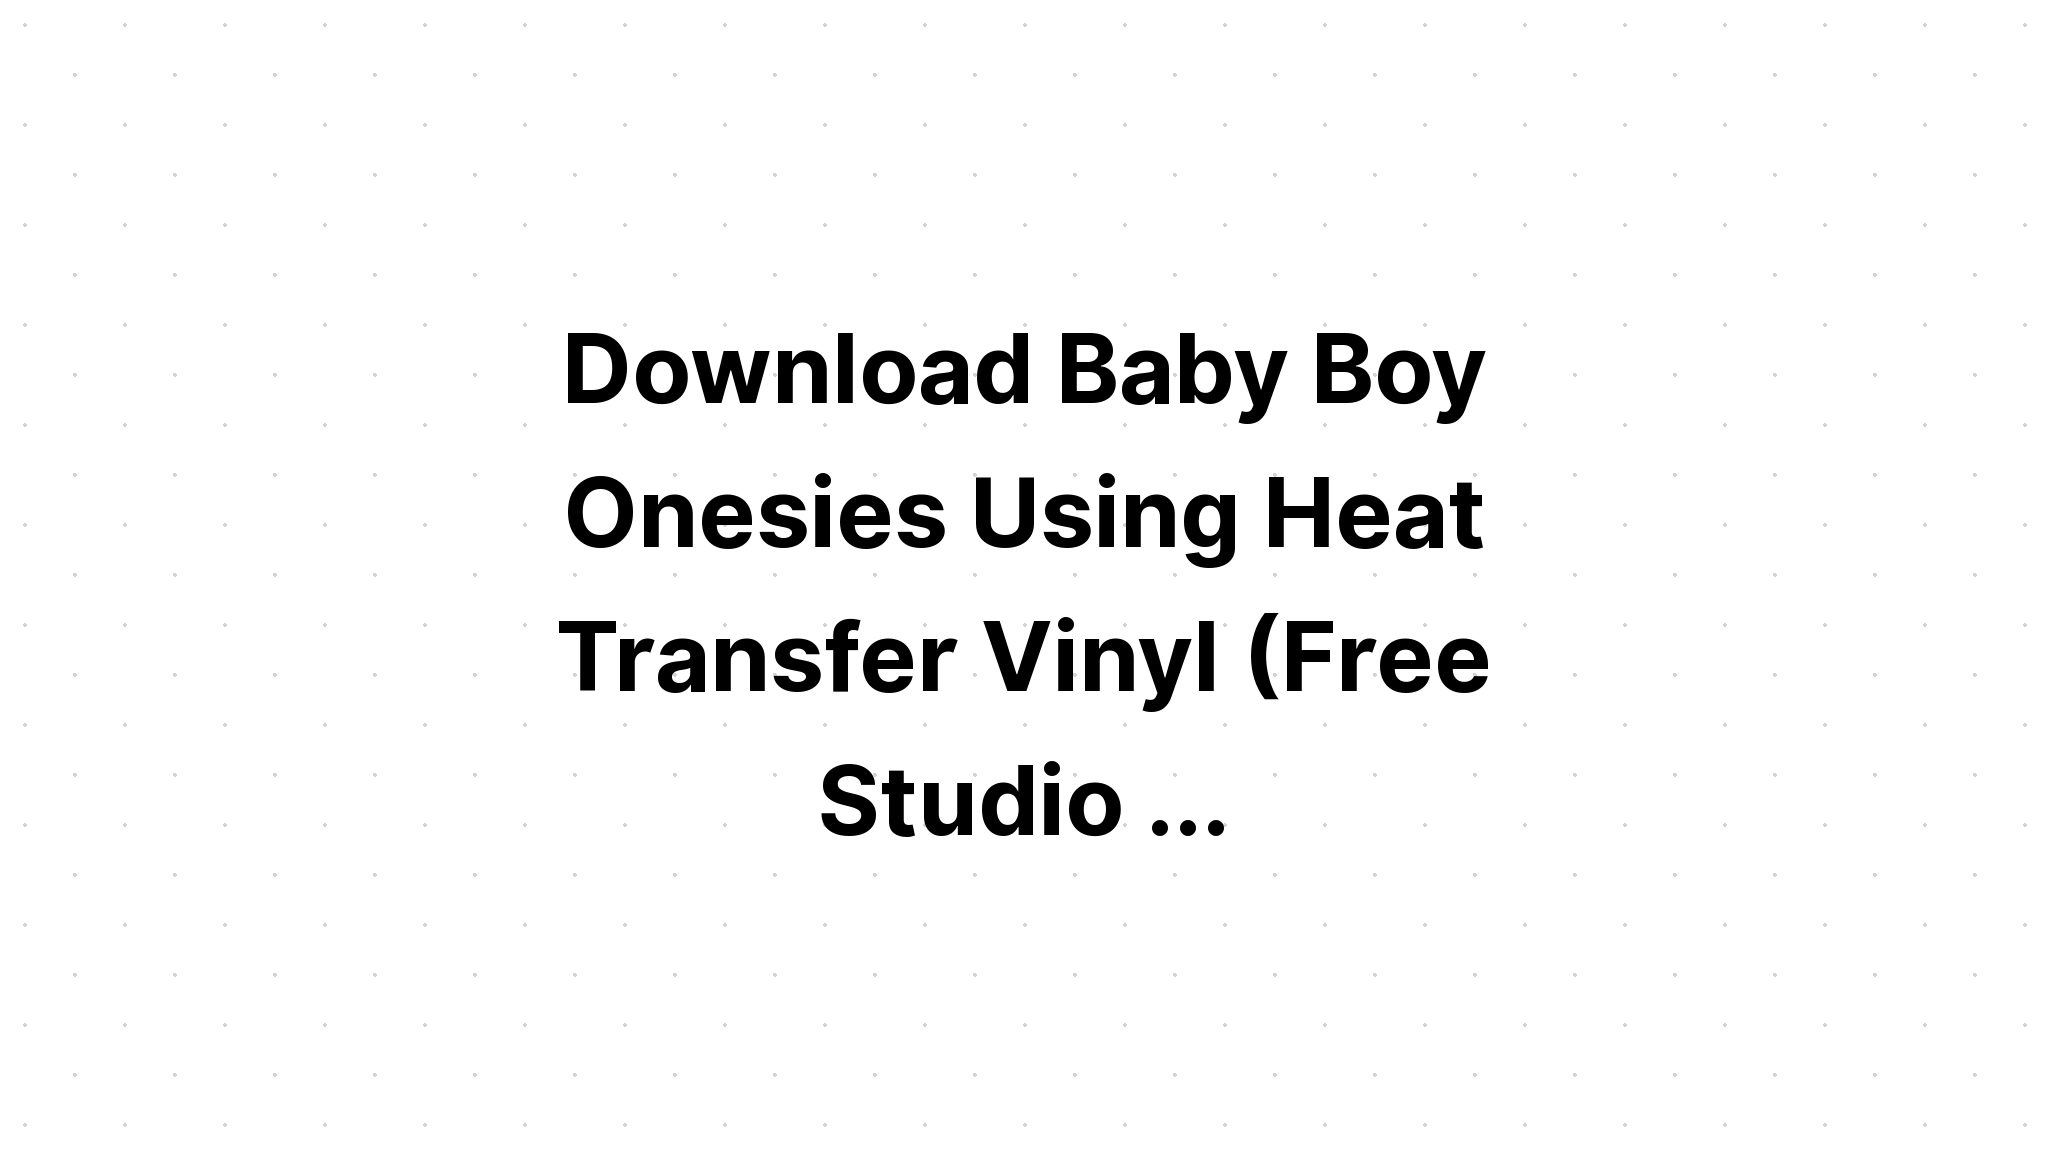 Download Cute Boy Designs Svg - Layered SVG Cut File